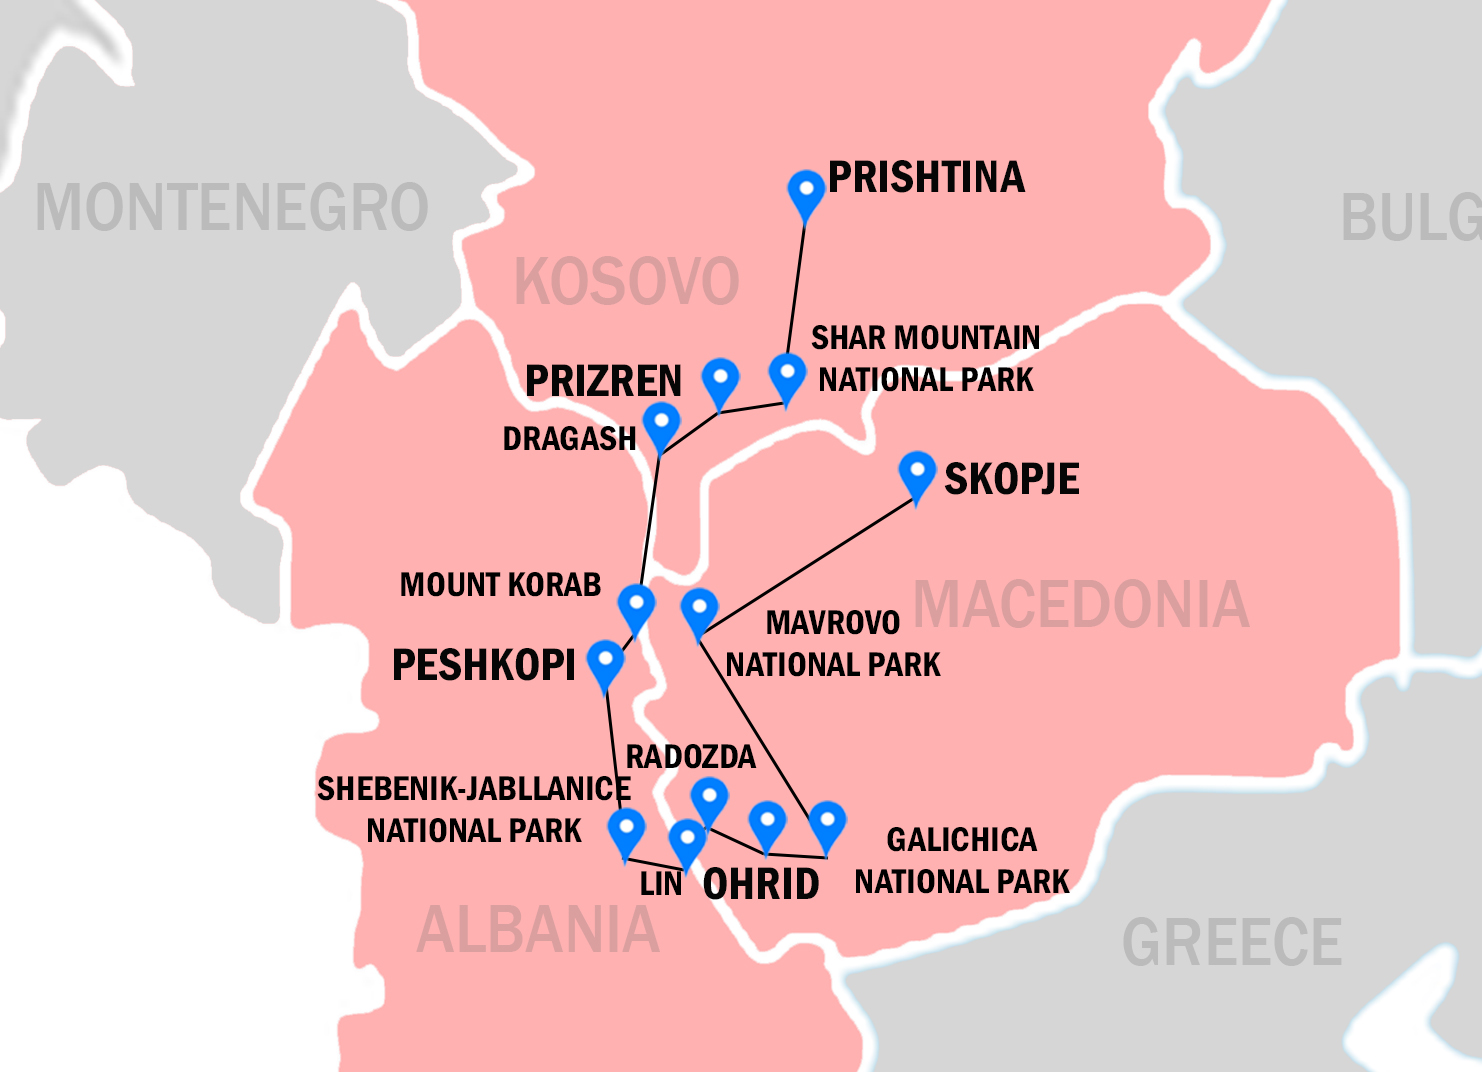 mto-kosovo-albania-macedonia